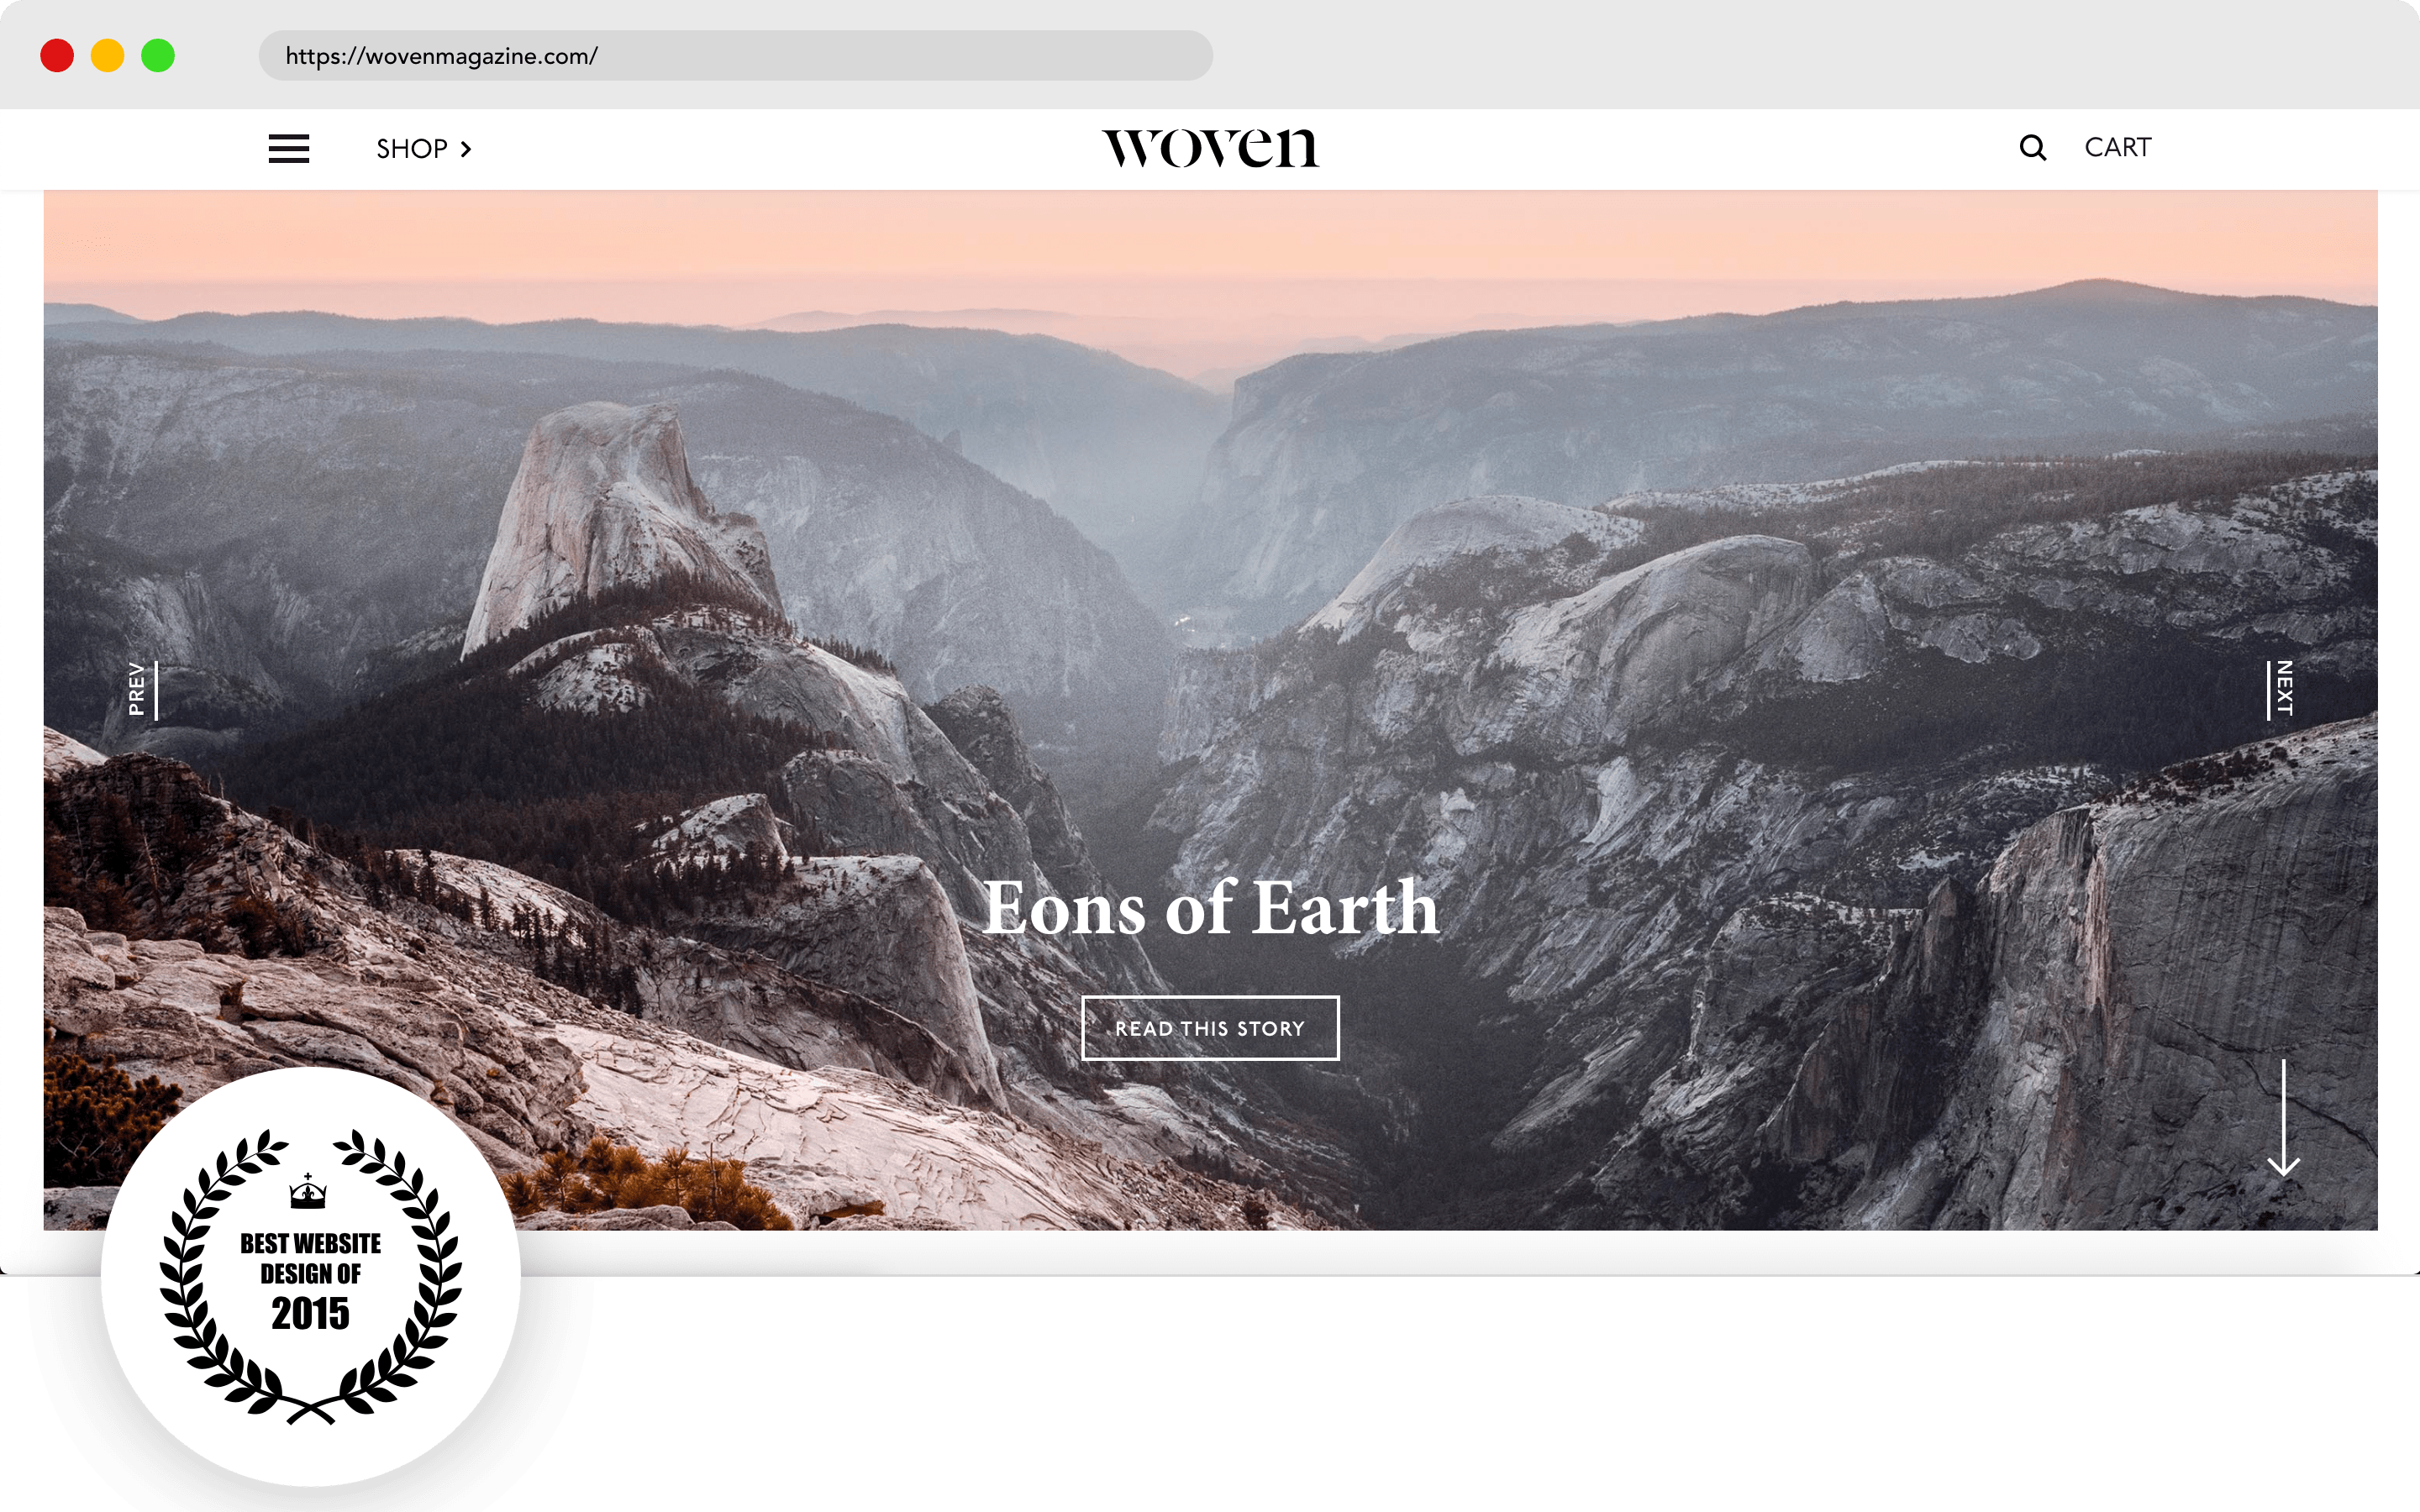 Best Website Woven magazine